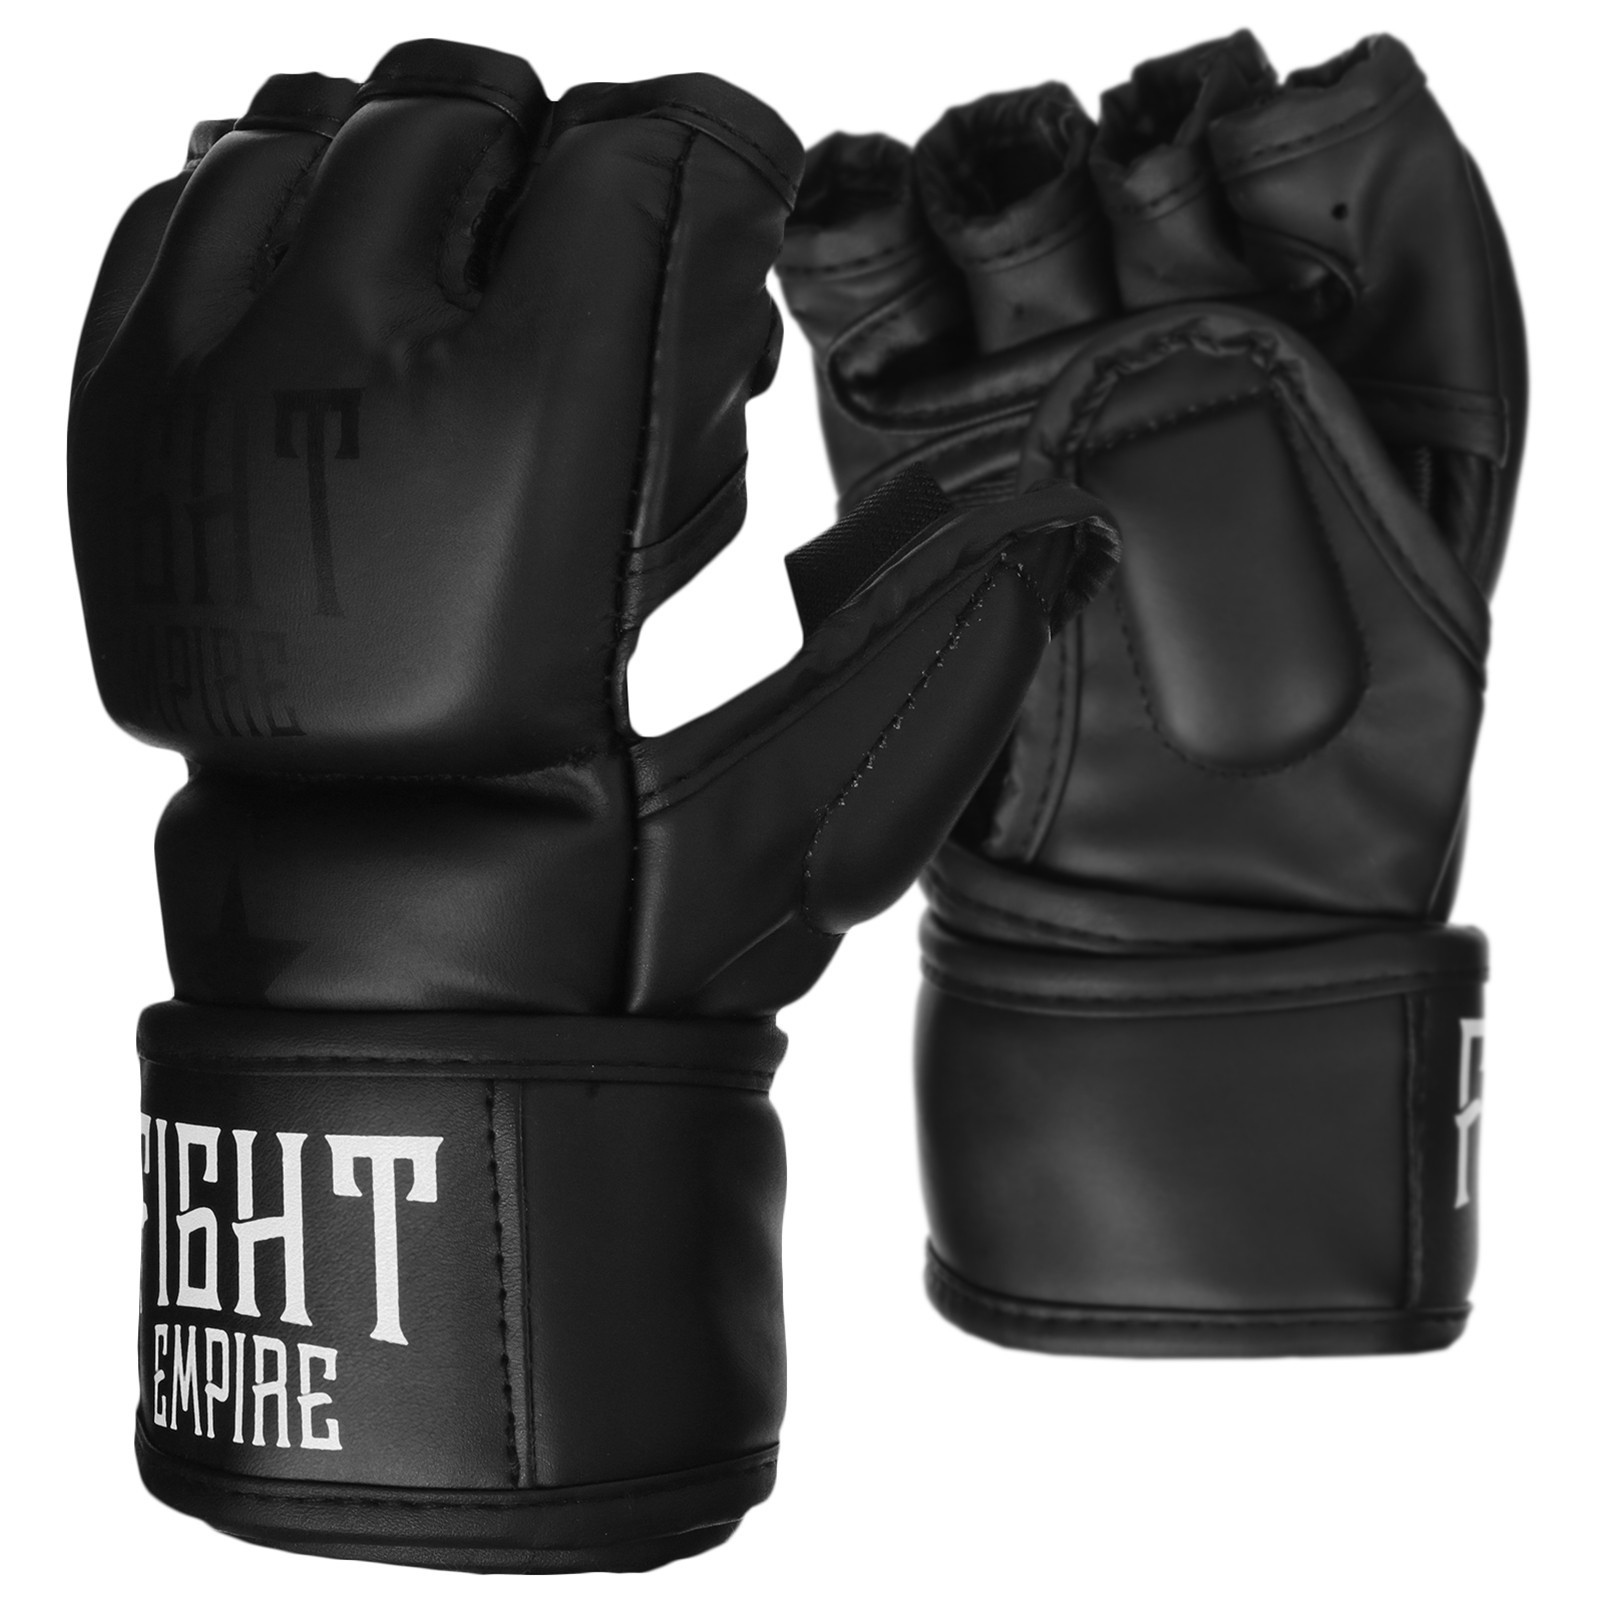 Снарядные перчатки Fight Empire 4153976, black, M INT